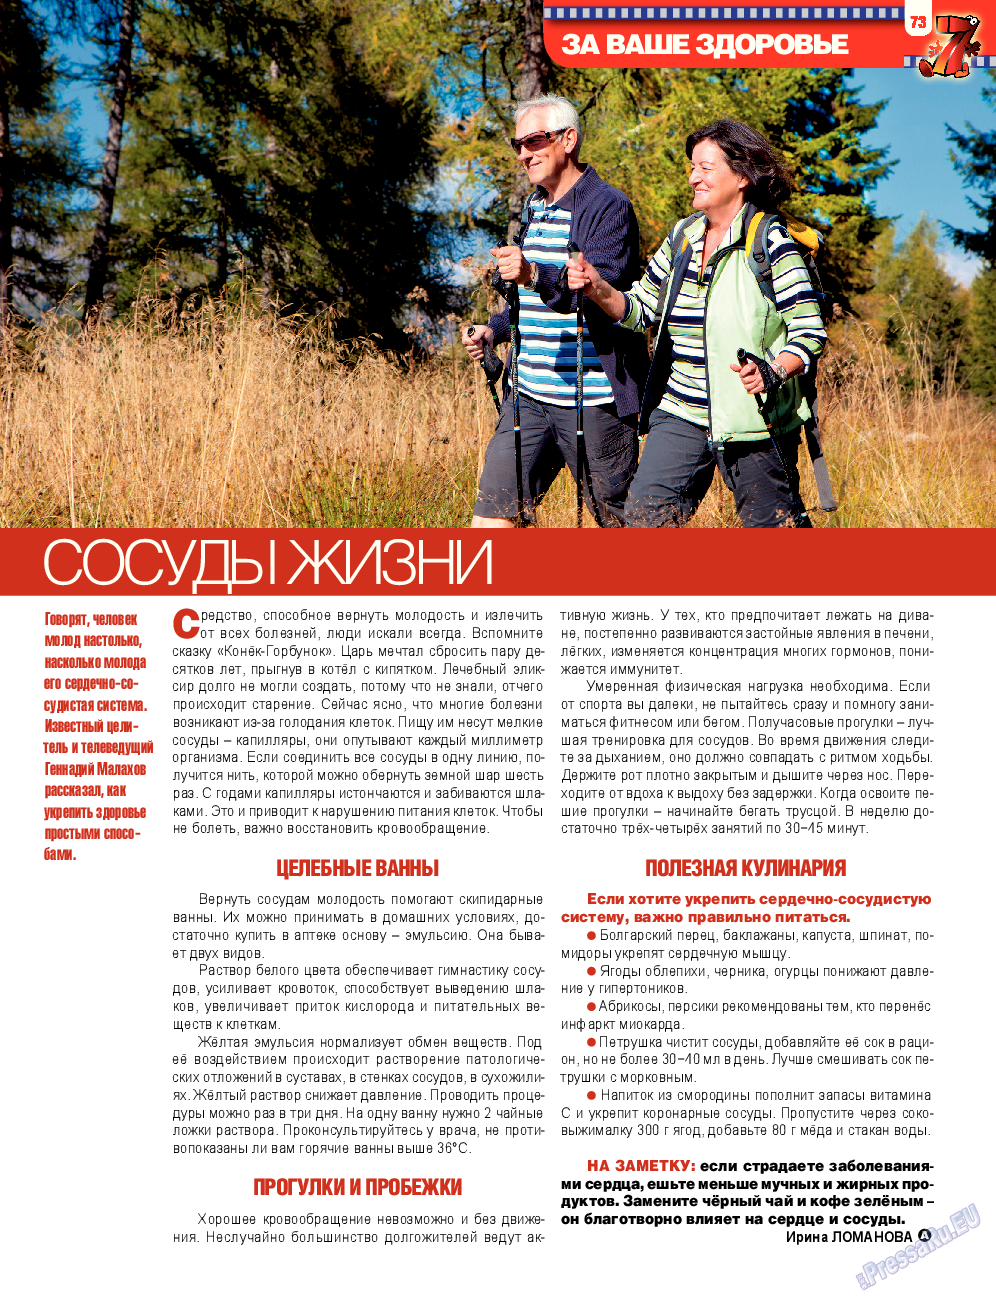 7плюс7я (журнал). 2013 год, номер 34, стр. 73